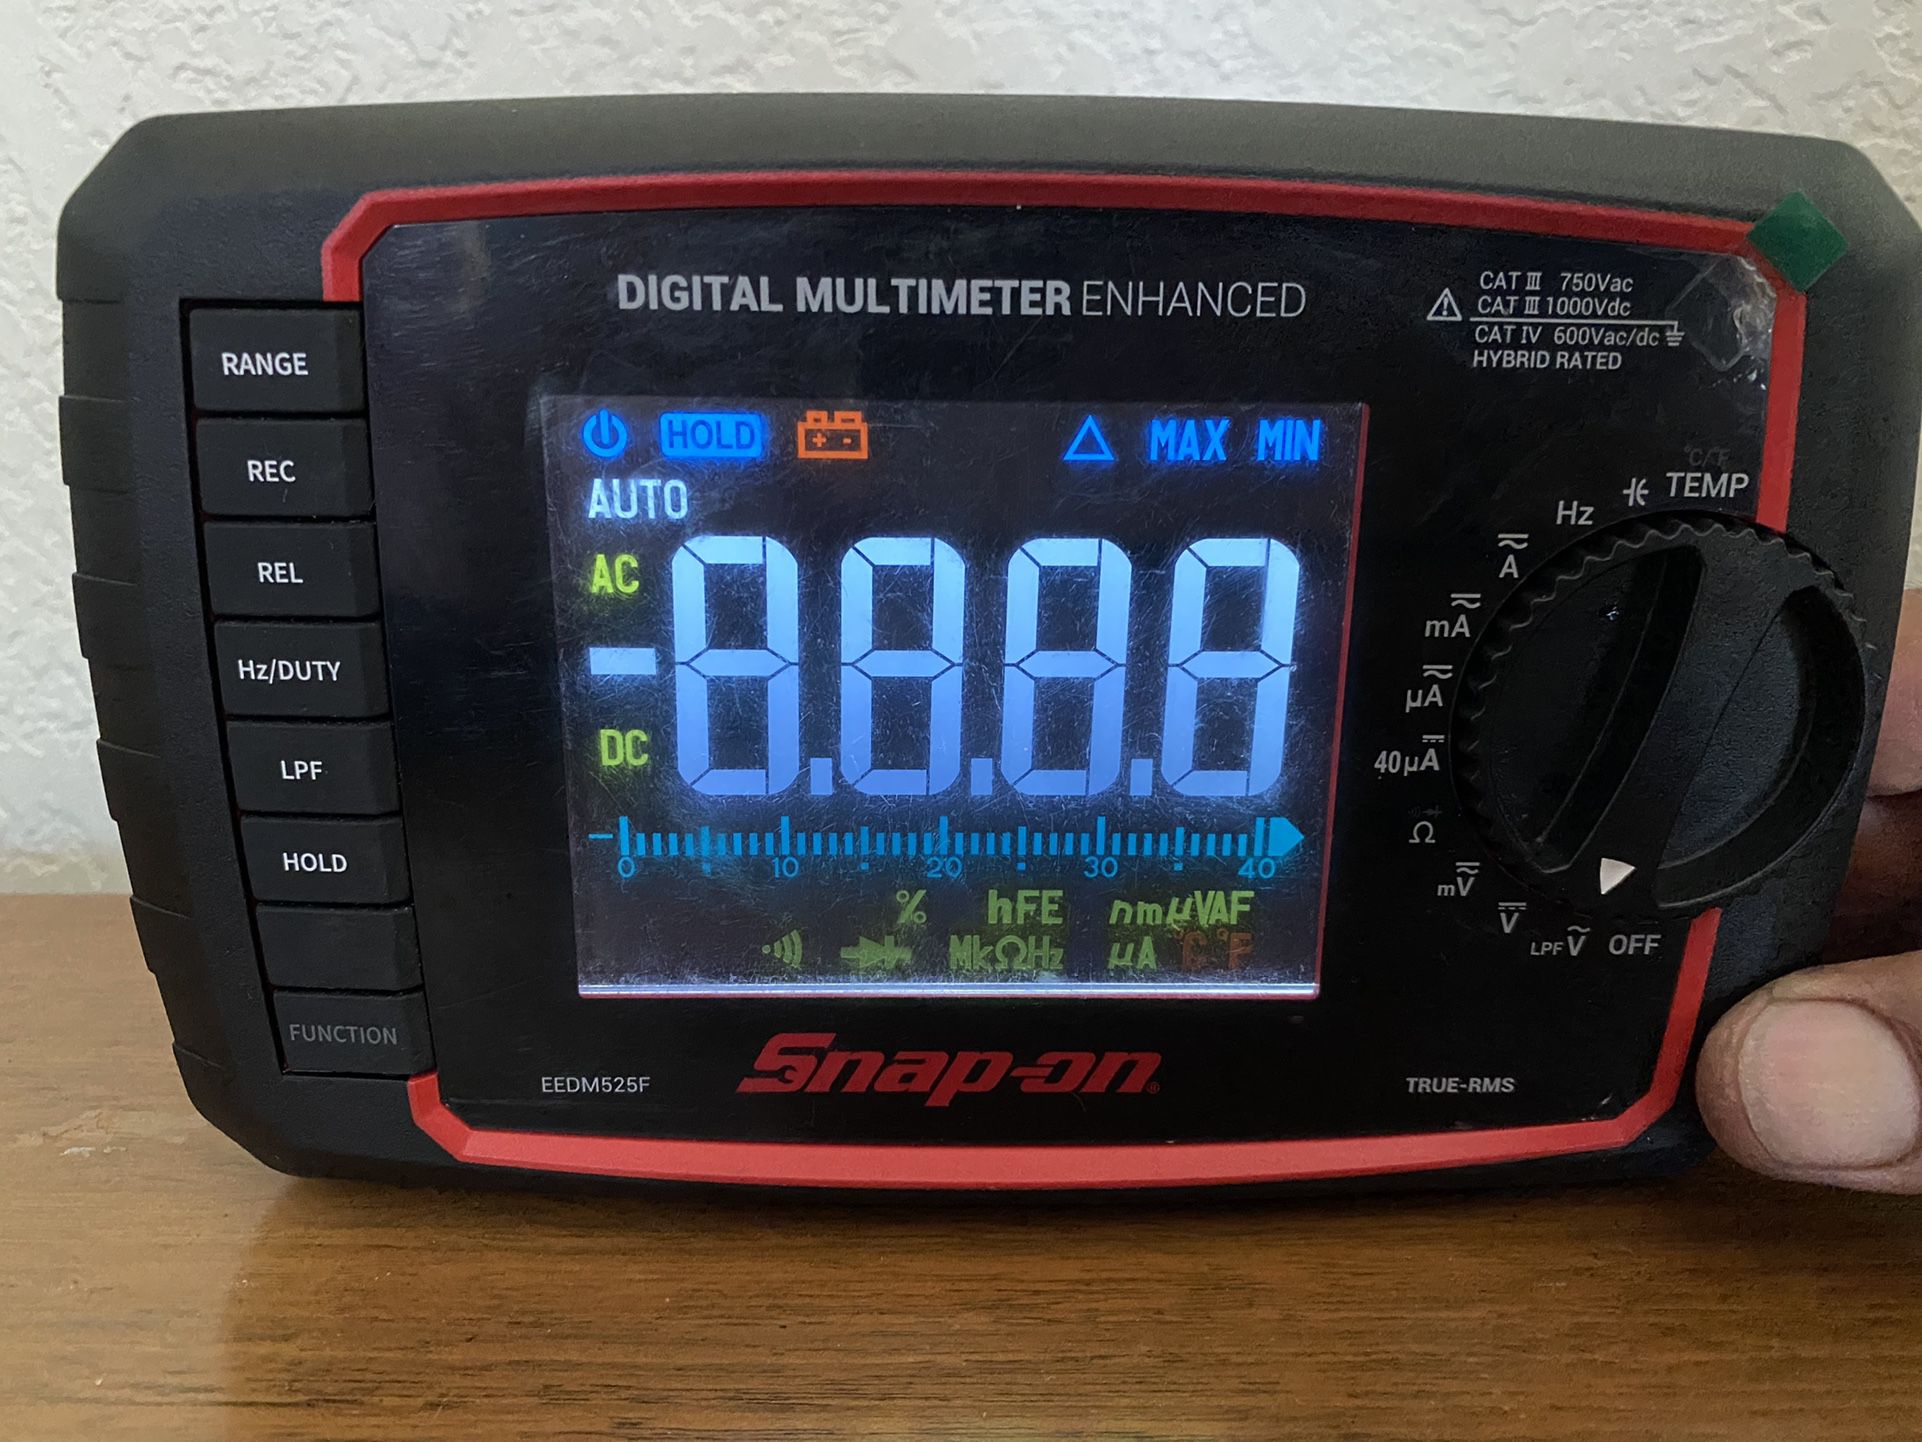 Snap-On Digital Multimeter Enhanced EEDM525F Model for Sale in Riverside, CA  - OfferUp